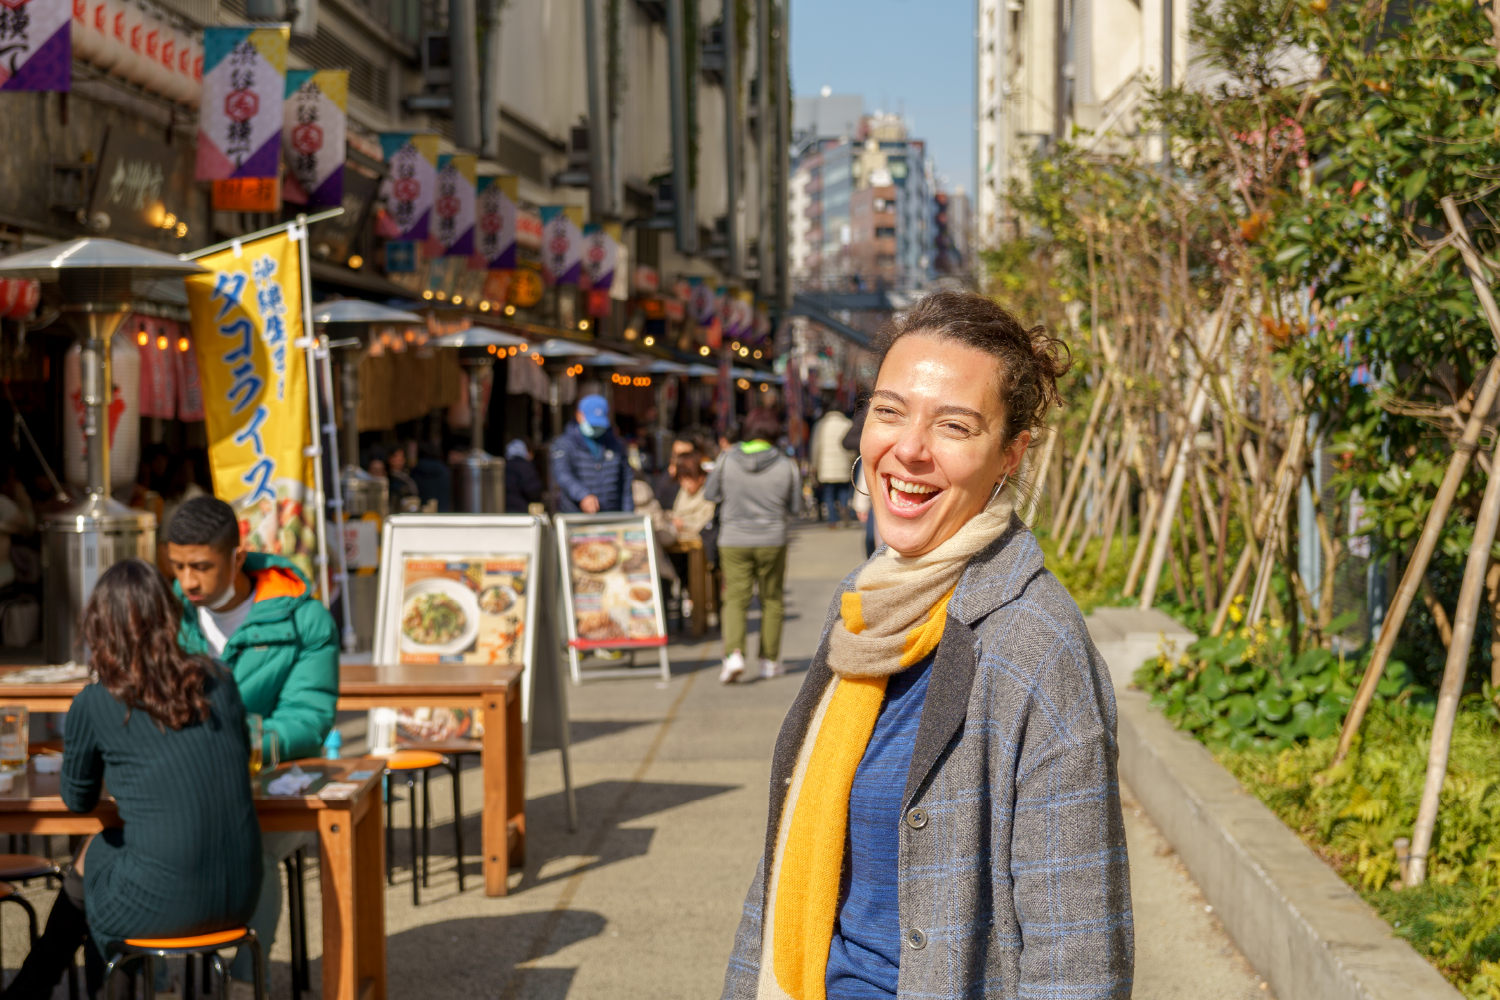 Street portrait of a woman in the izakaya alley of Miyashita Park.